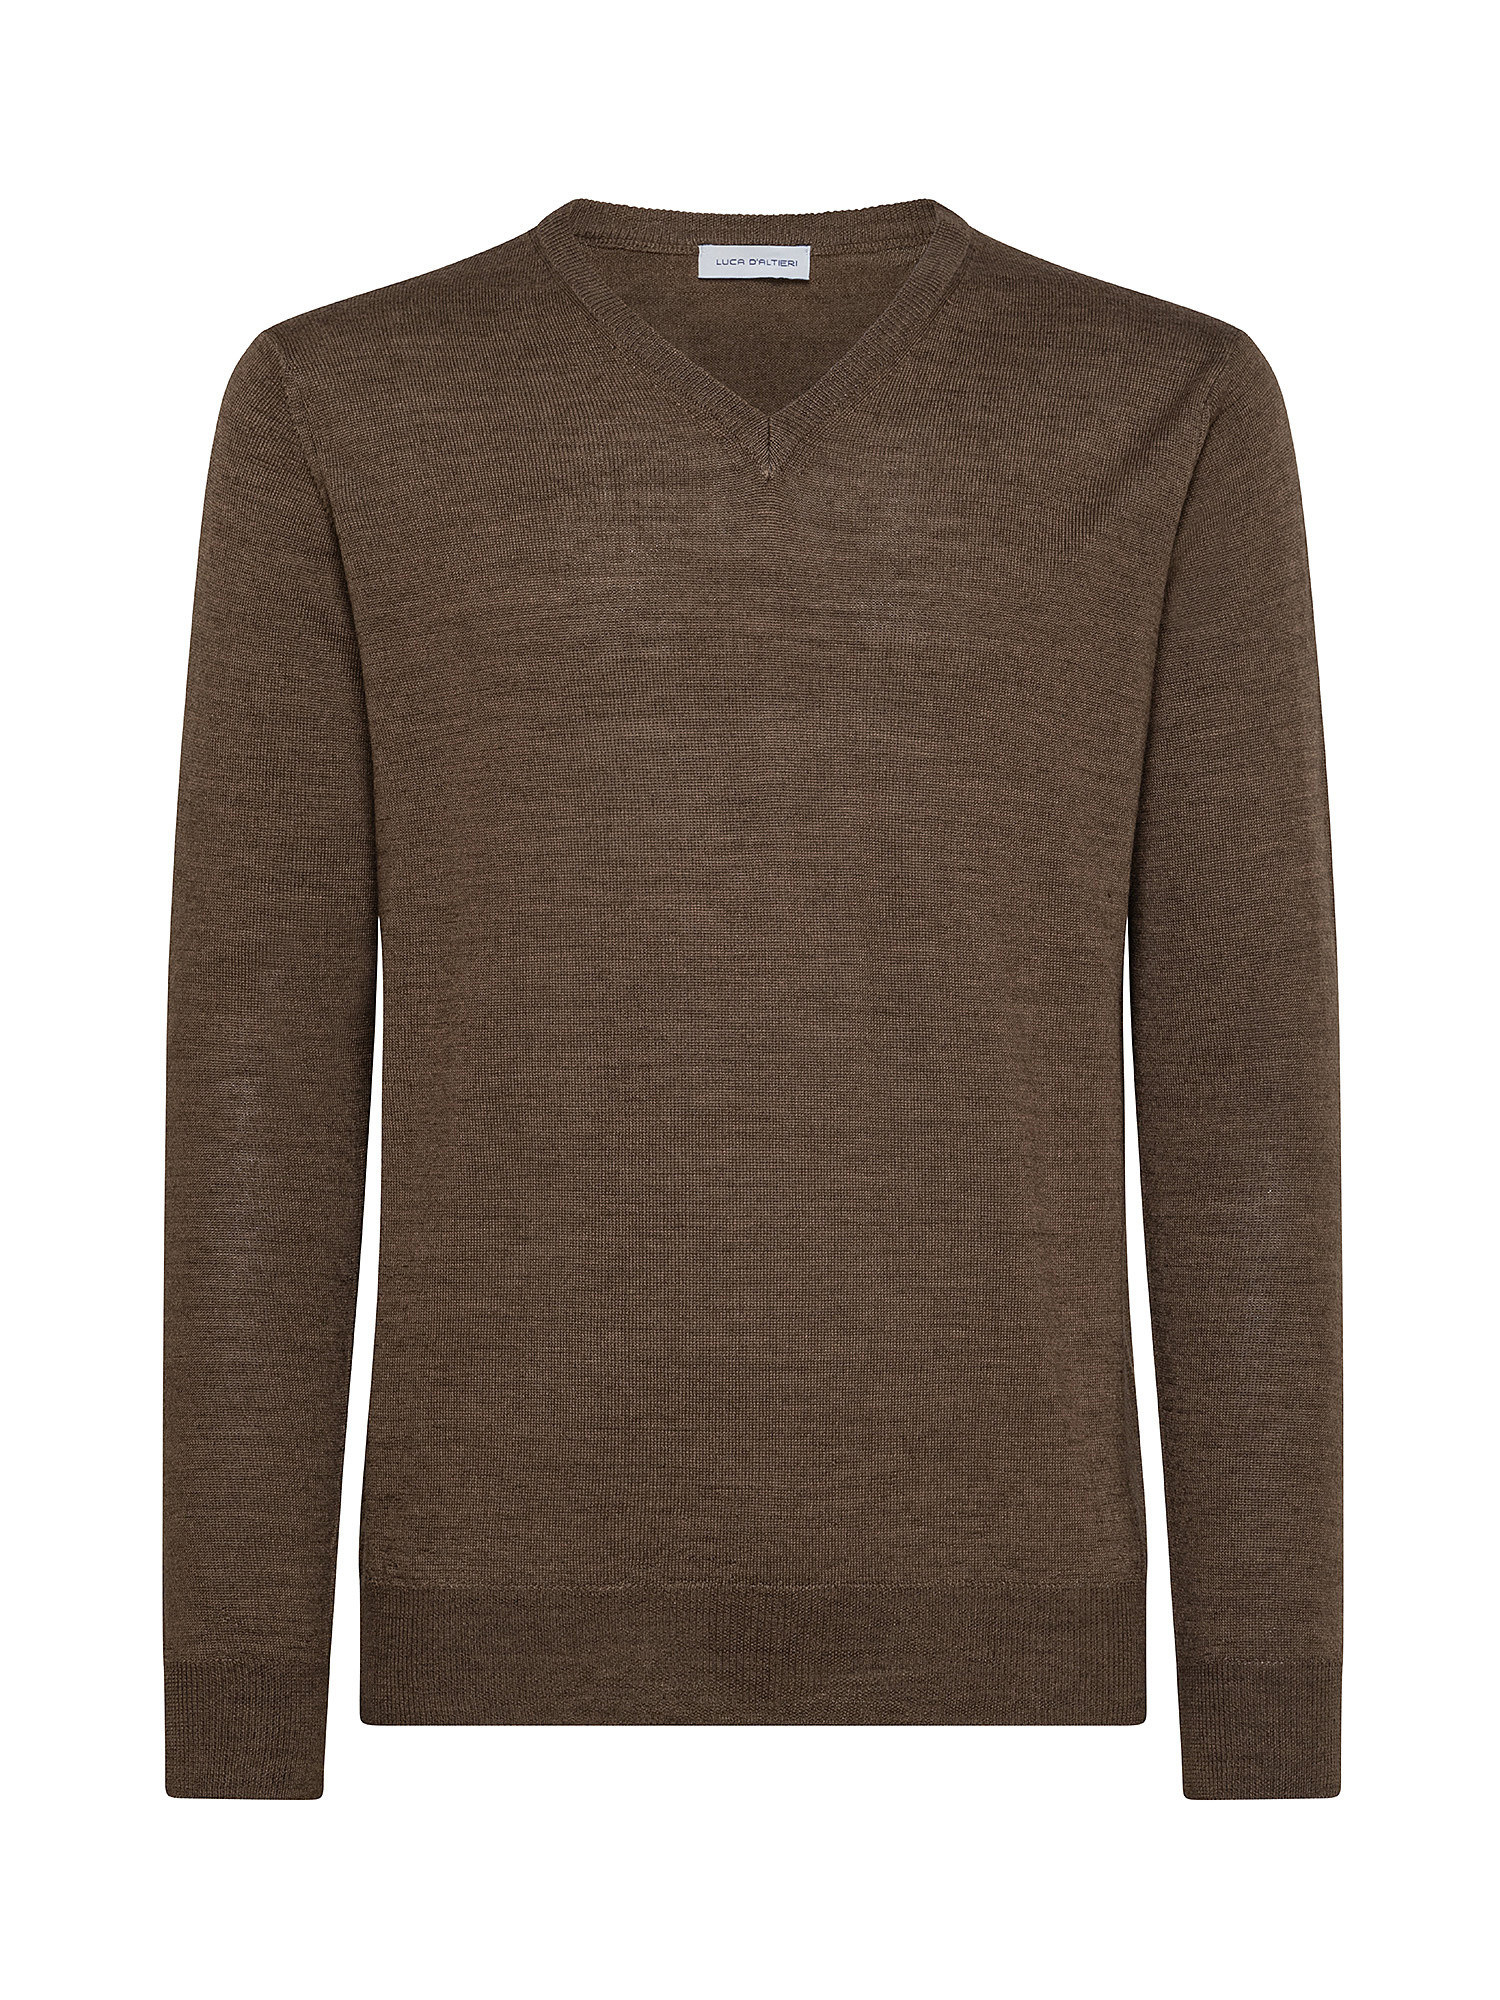 Merino Blend V-neck sweater - Machine washable, Hazelnut Brown, large image number 0